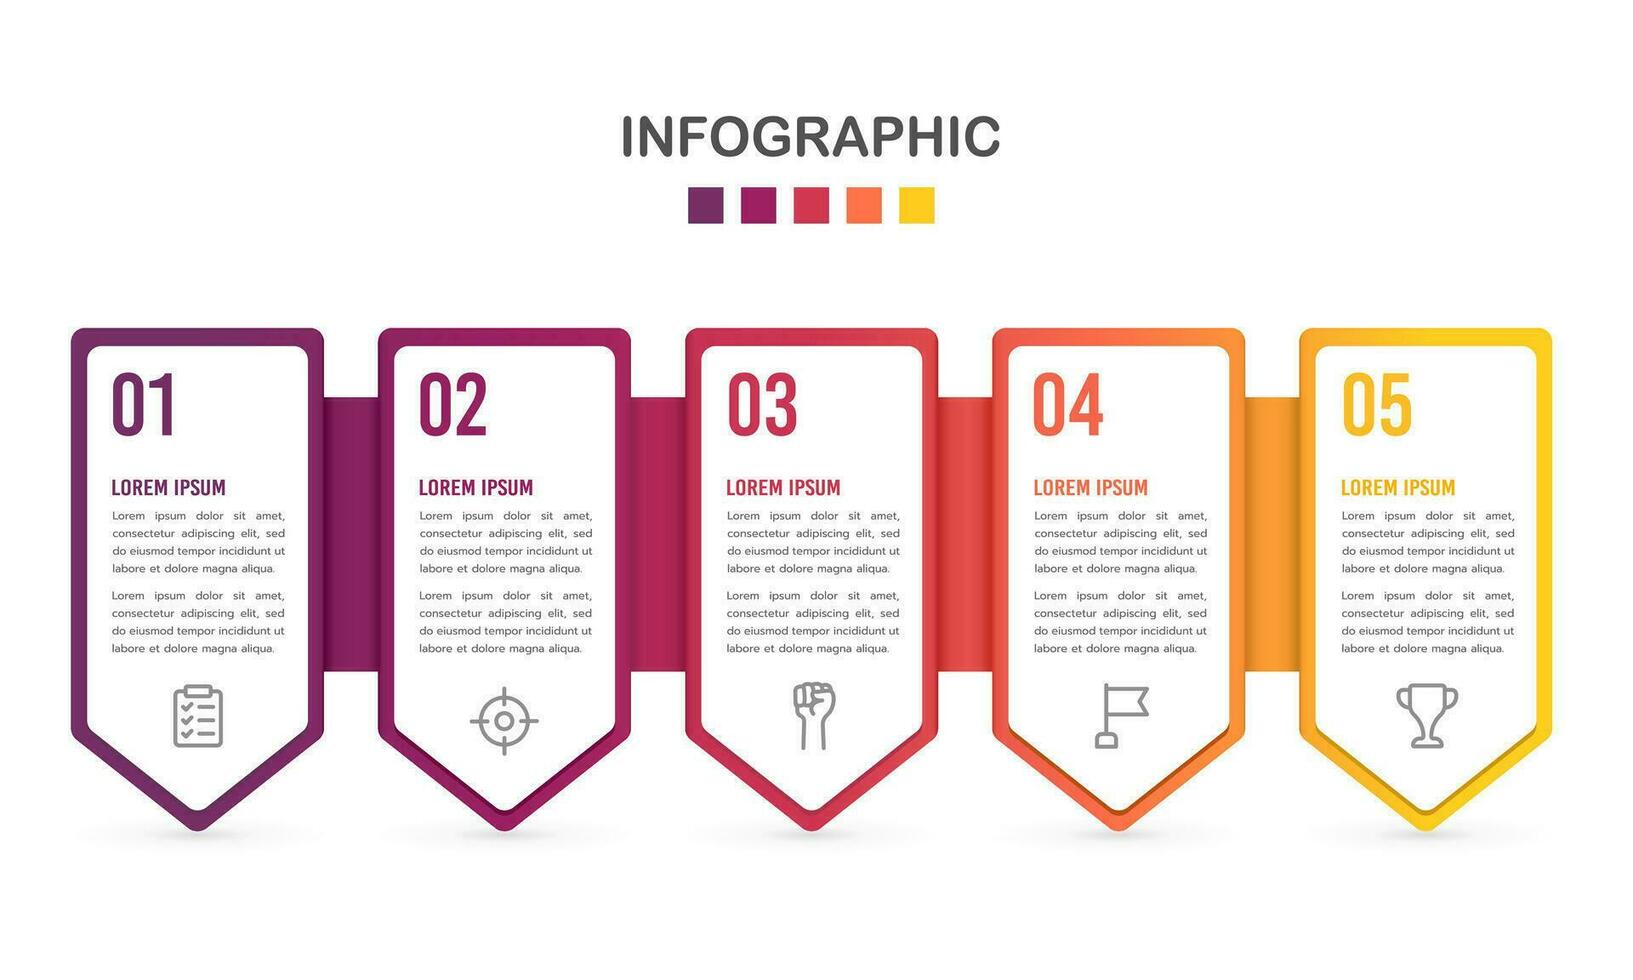 5 5 proceso infografía etiquetas diseño modelo con íconos para negocio. vector ilustración.